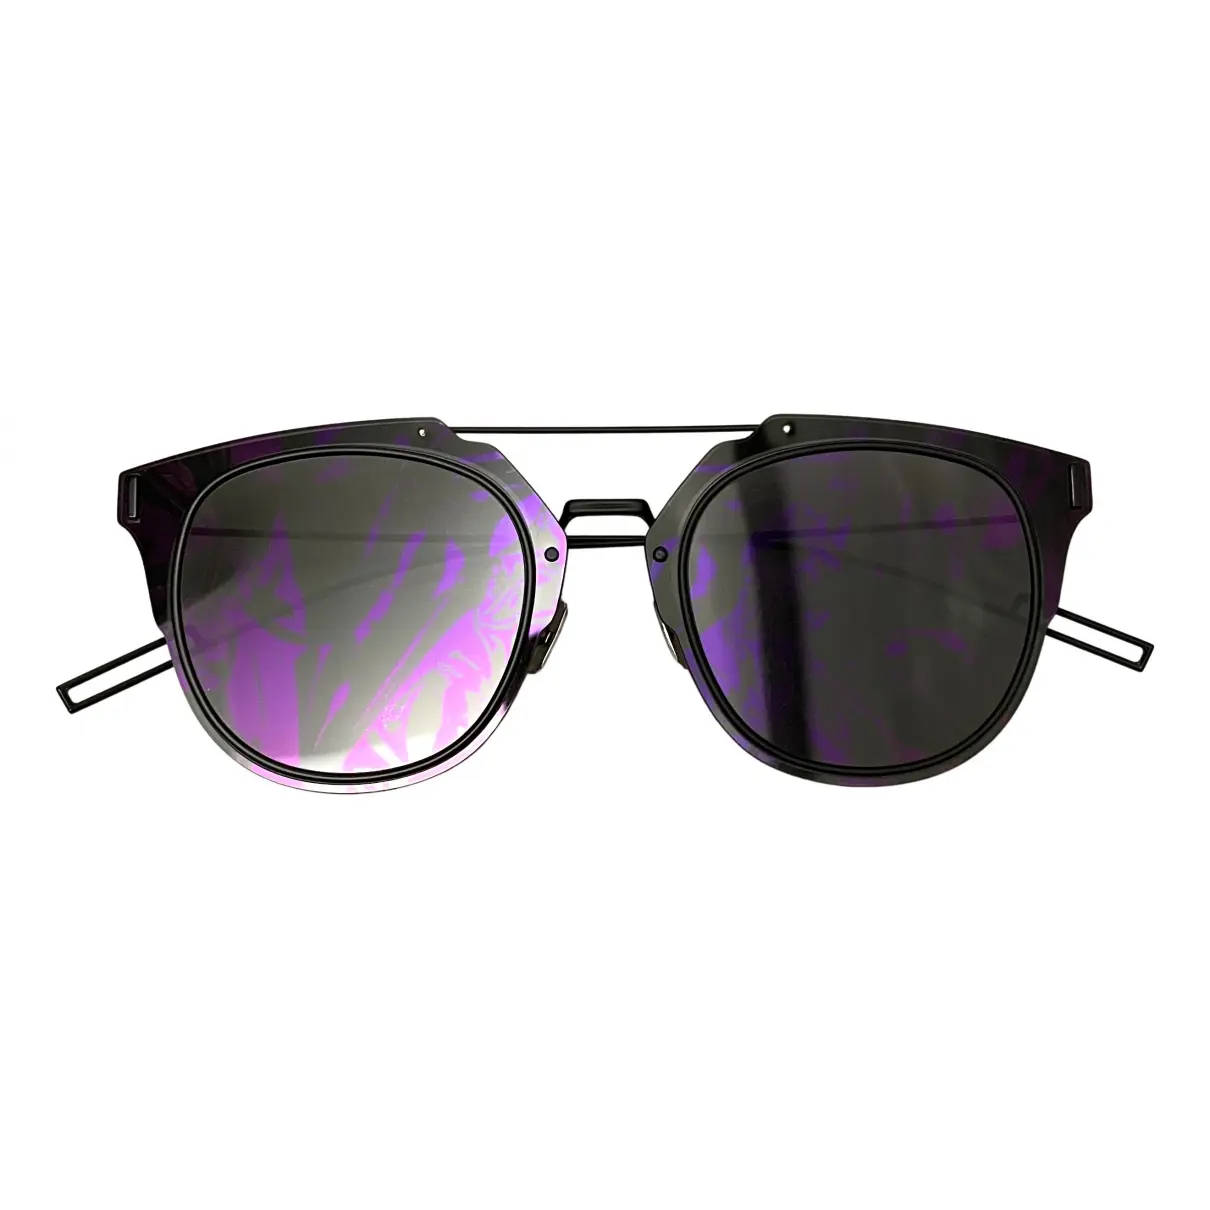 Dior Composit 1.0 sunglasses Dior Homme